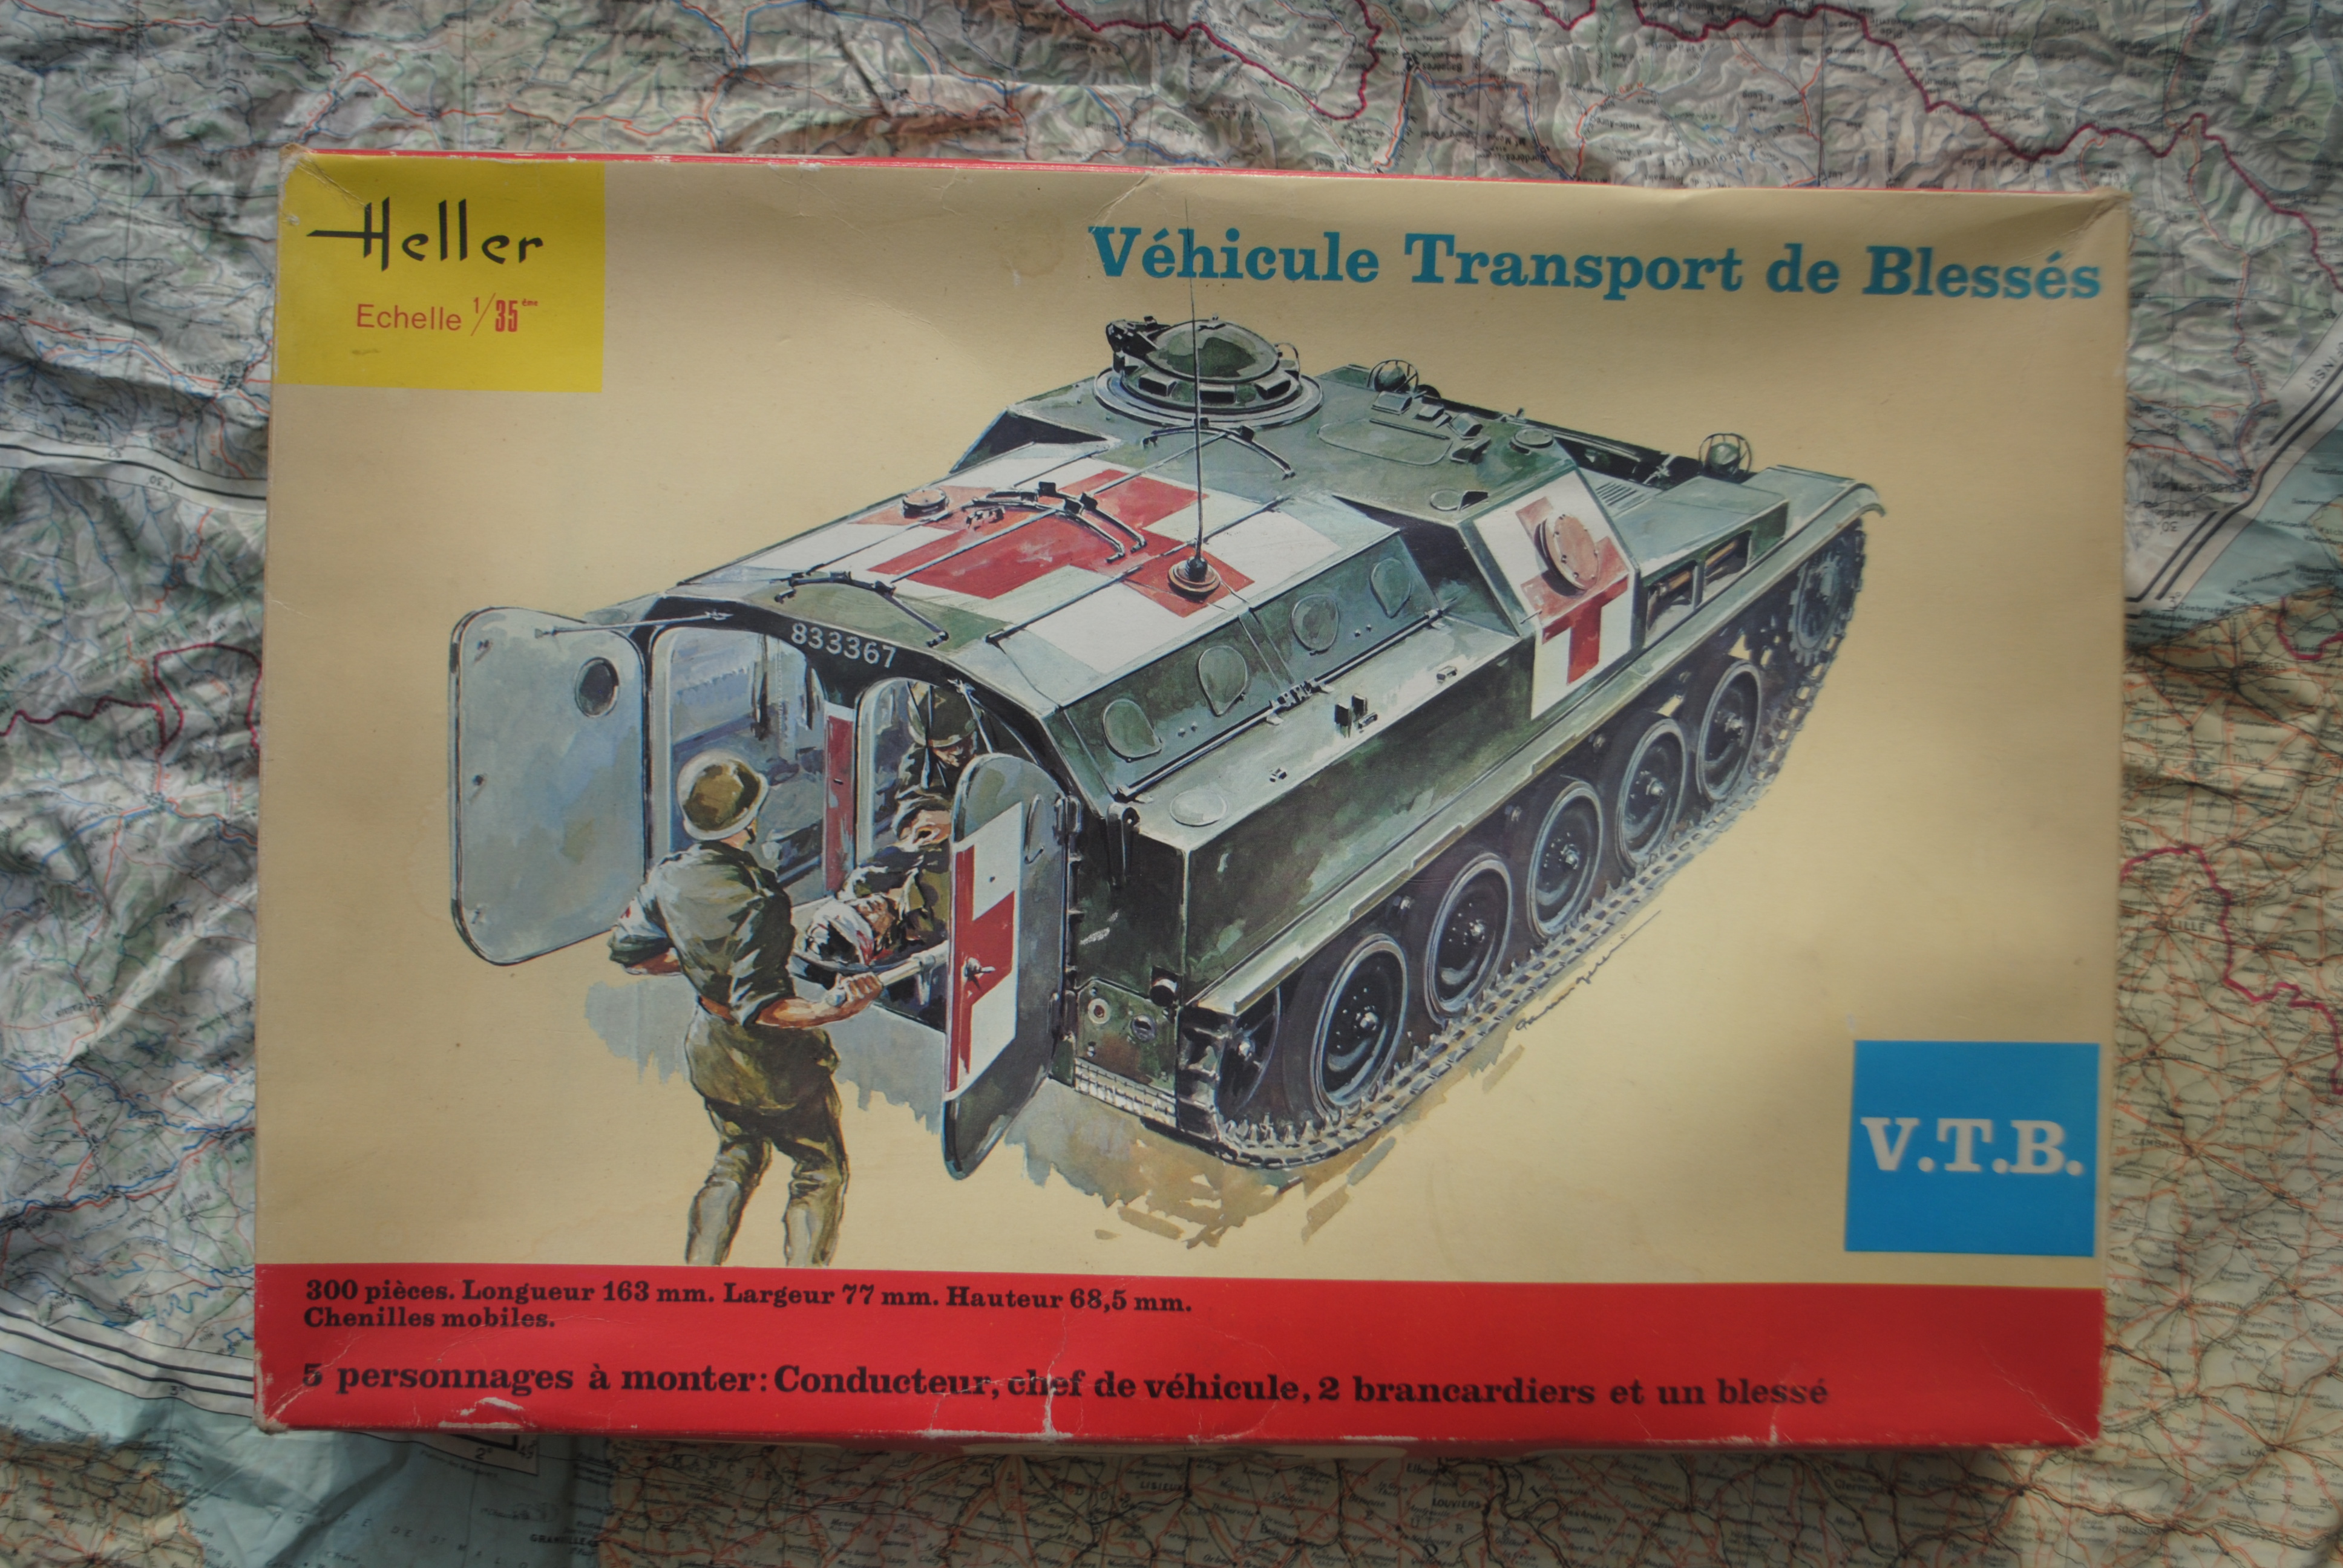 Heller 787 Véhicule Transport de Blessés V.T.B. transport vehicle